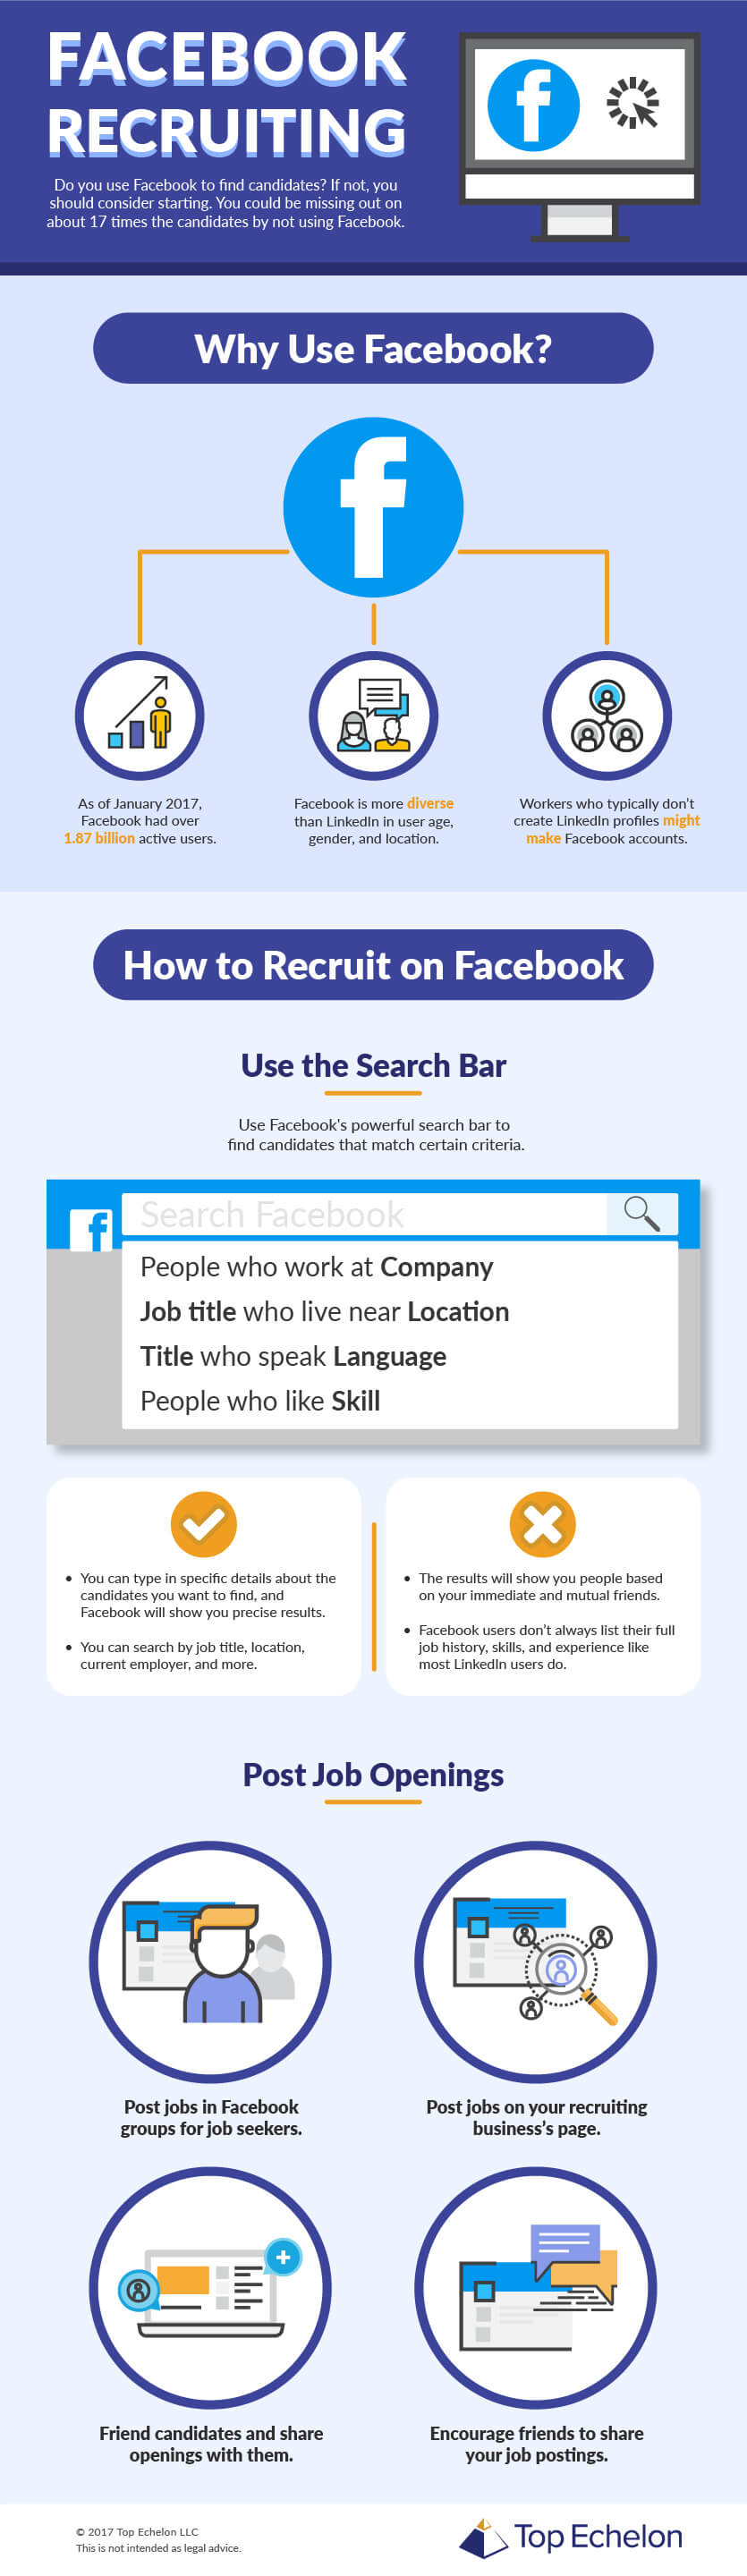 Facebook Recruiting infographic